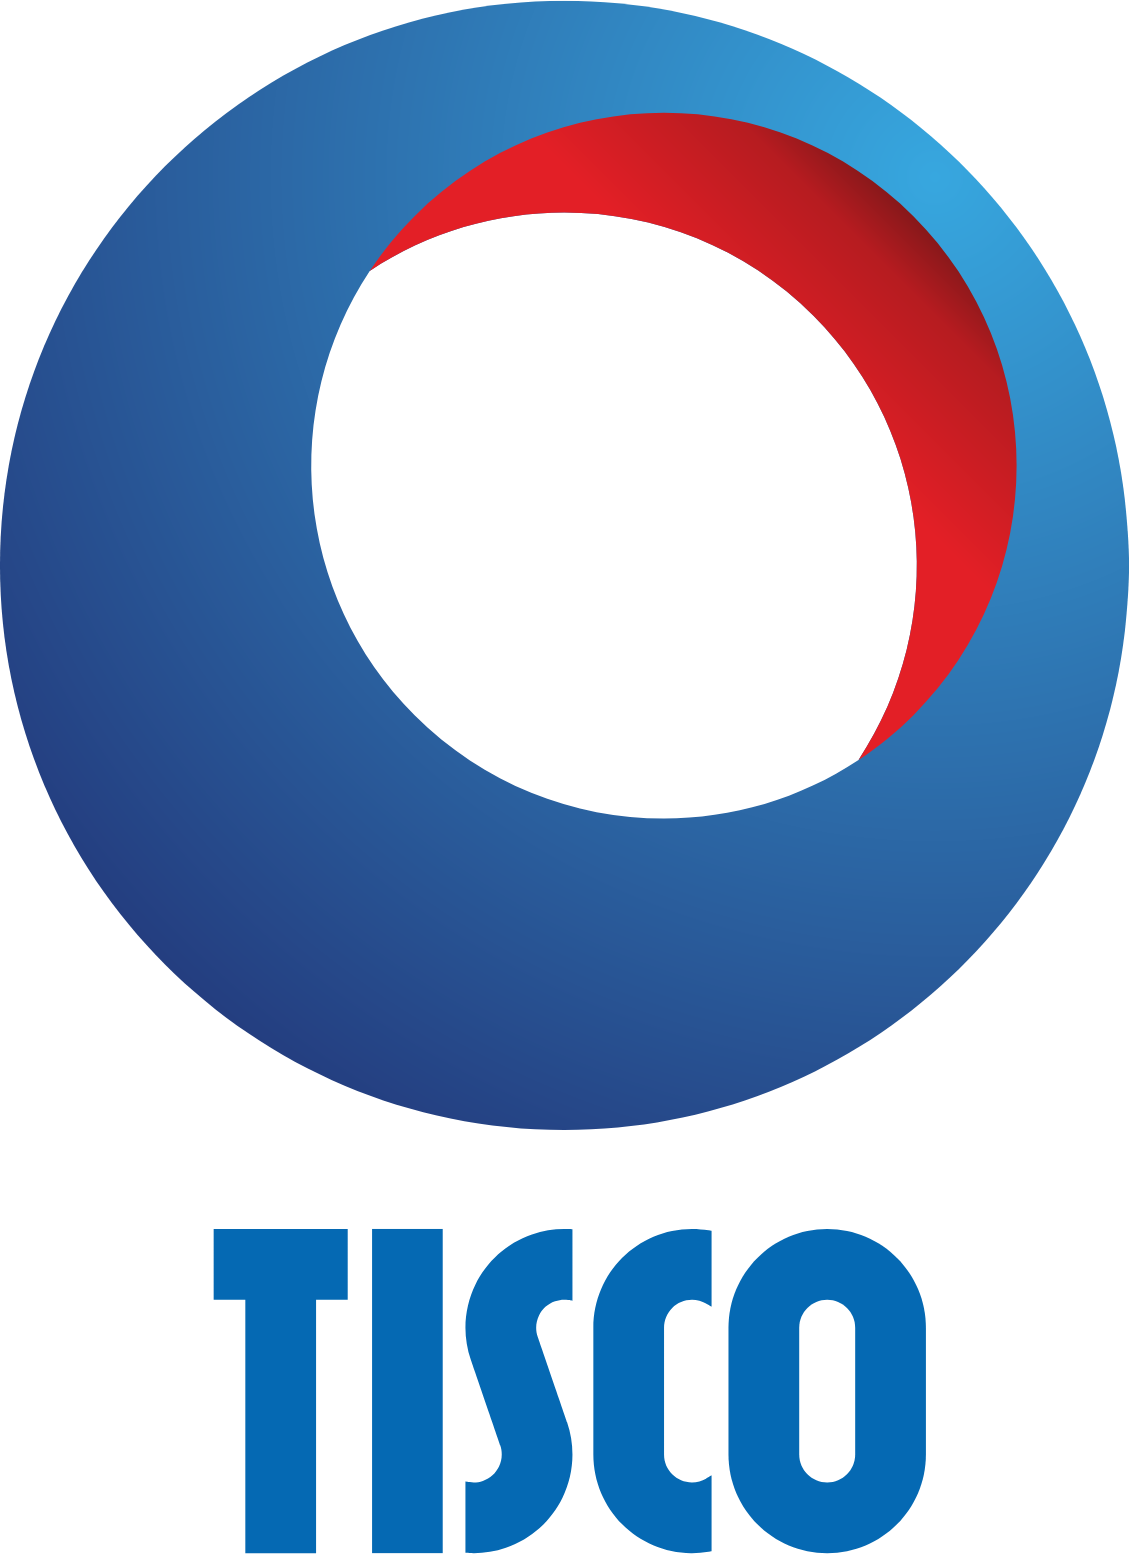 TISCO Financial Group logo large (transparent PNG)